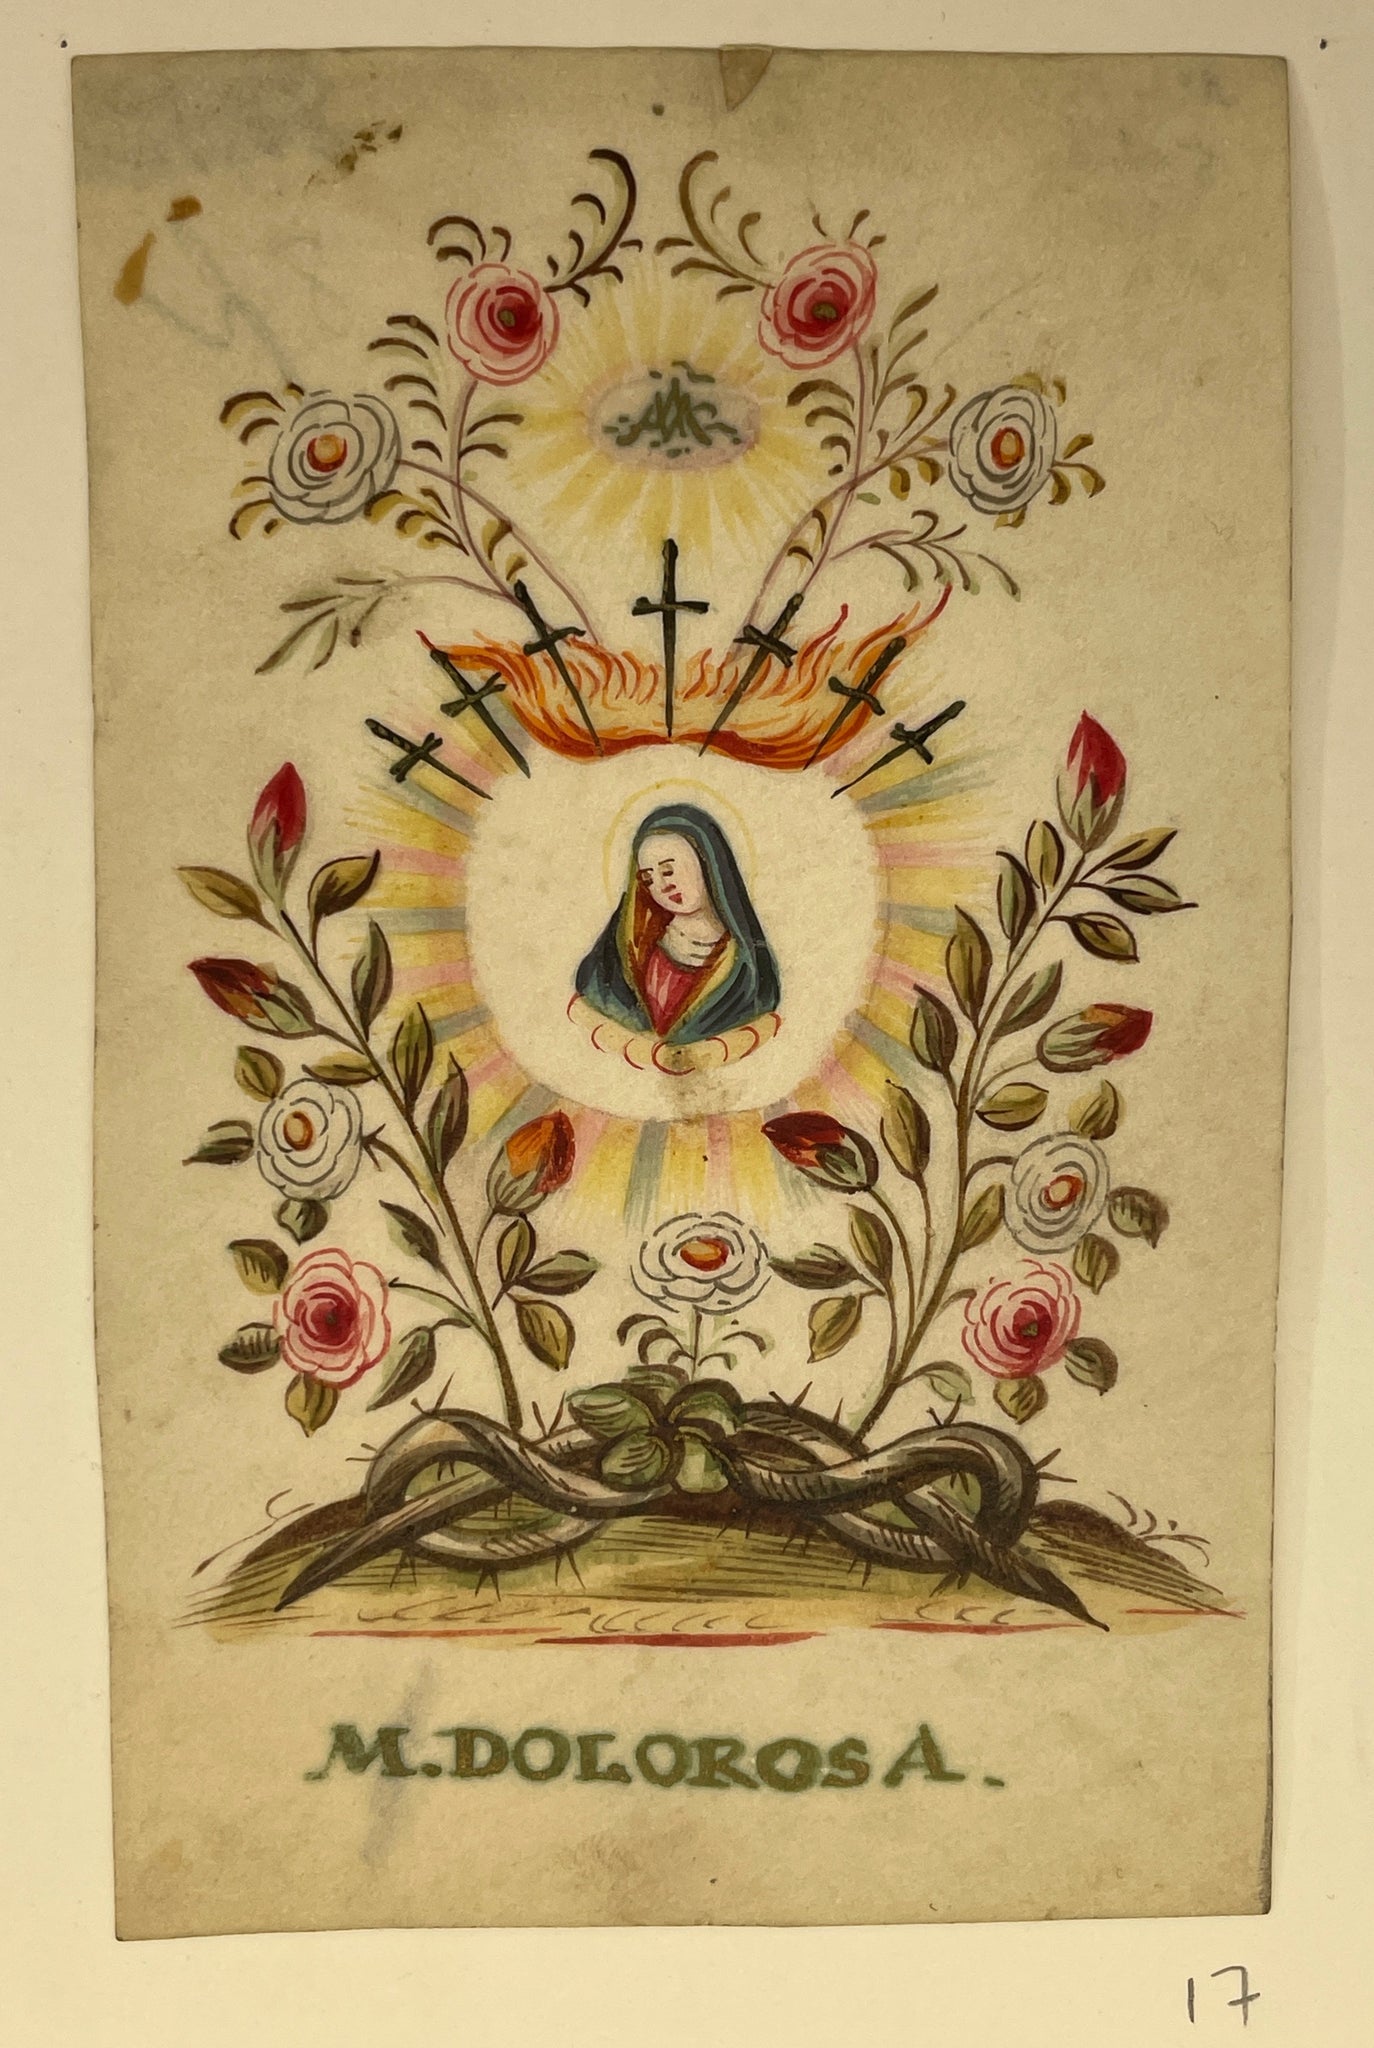 #17 - Handpainted Devotional Prayer Card, ca. 1820